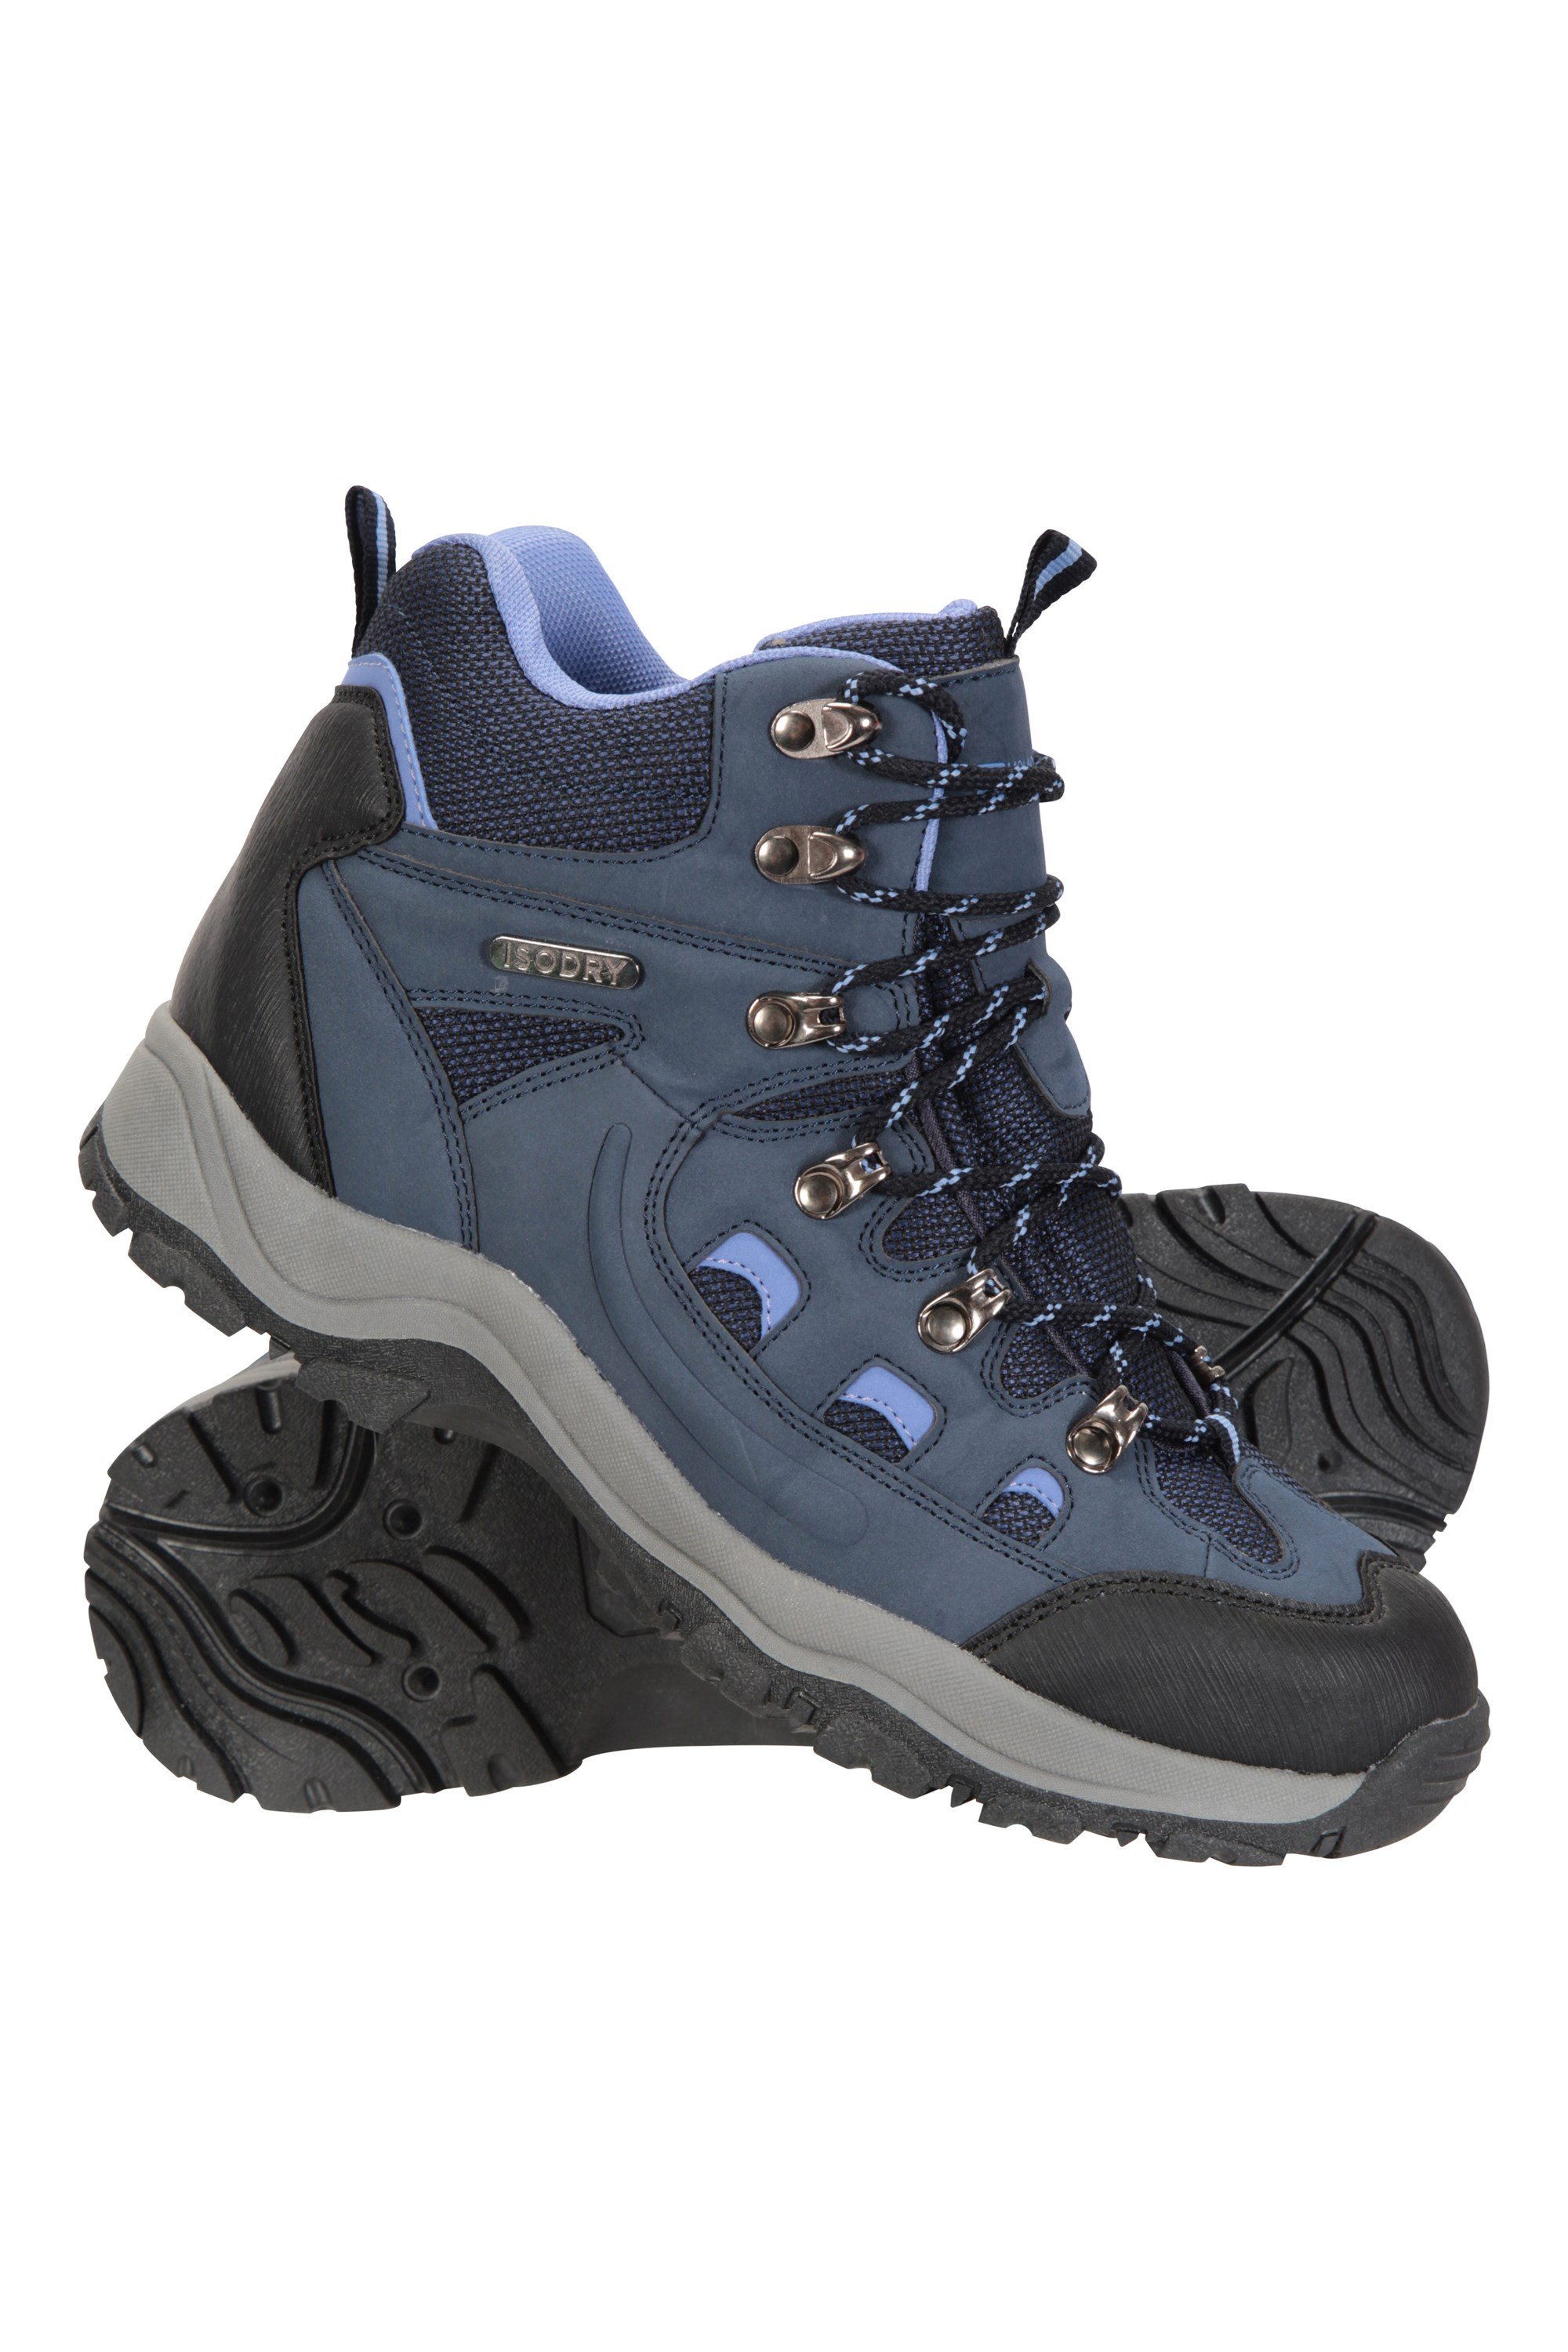 ladies waterproof walking boots size 7 